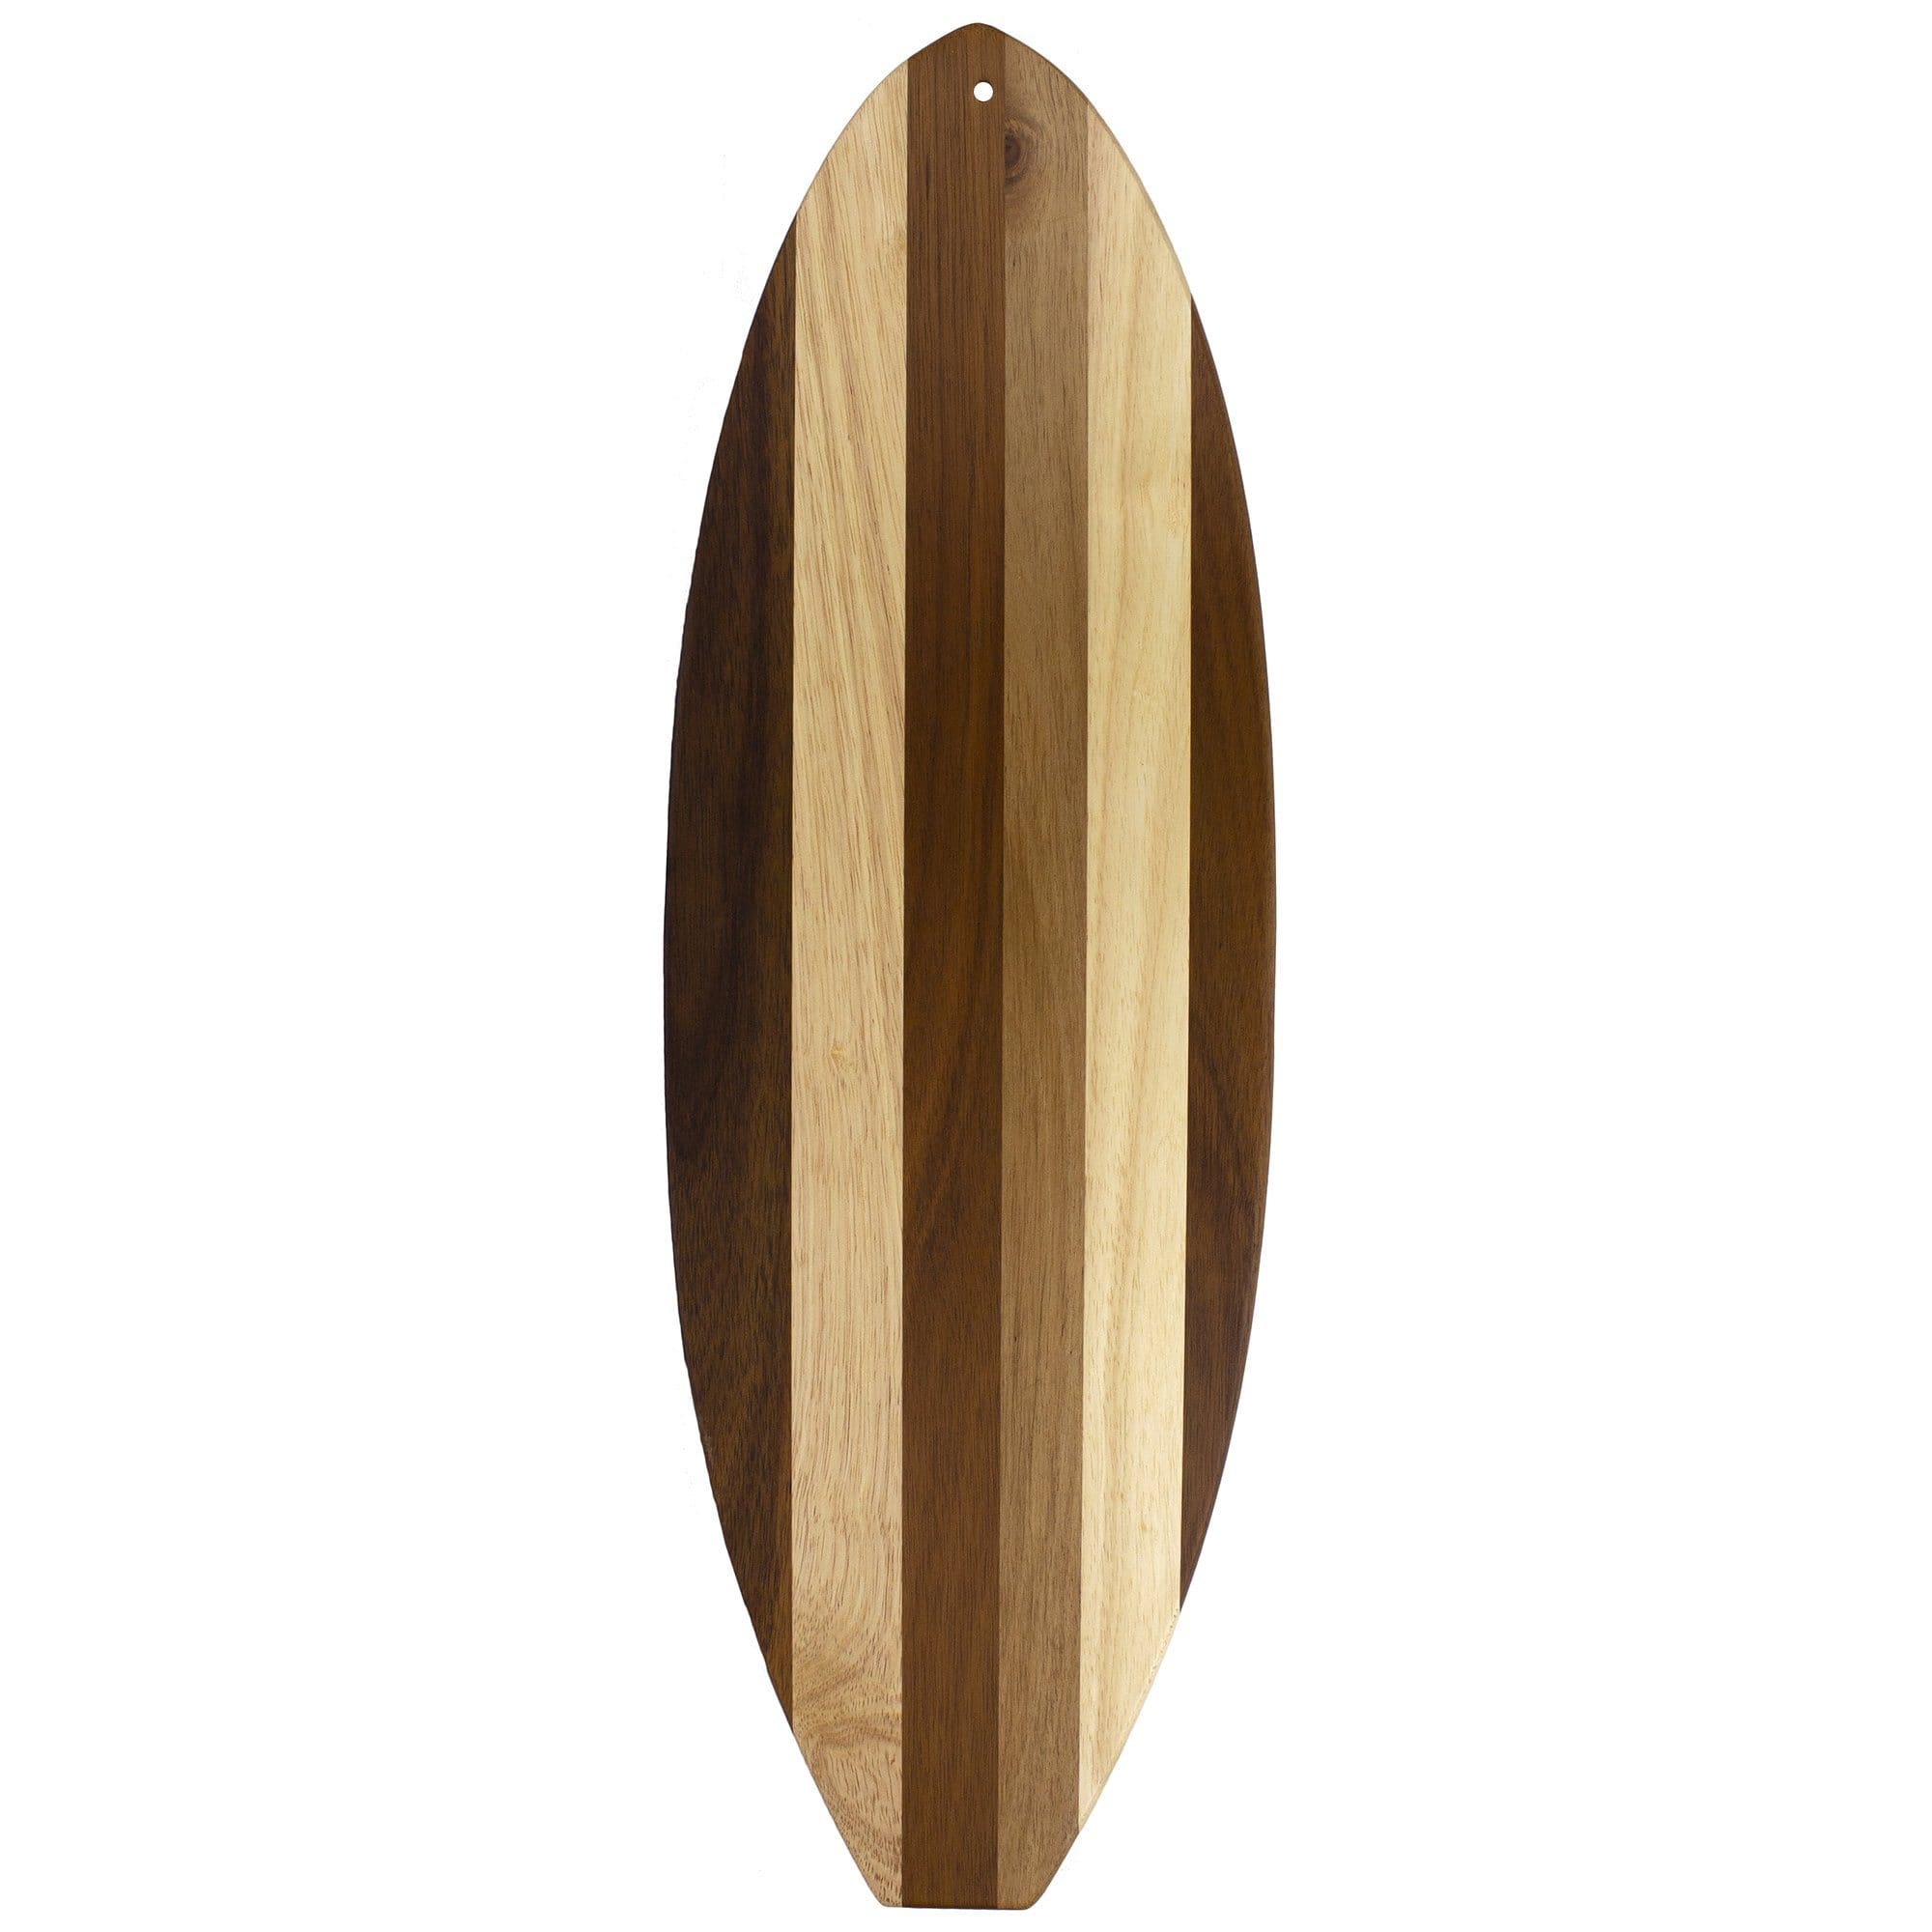 Bamboo Surfboard Serving Board - Blue